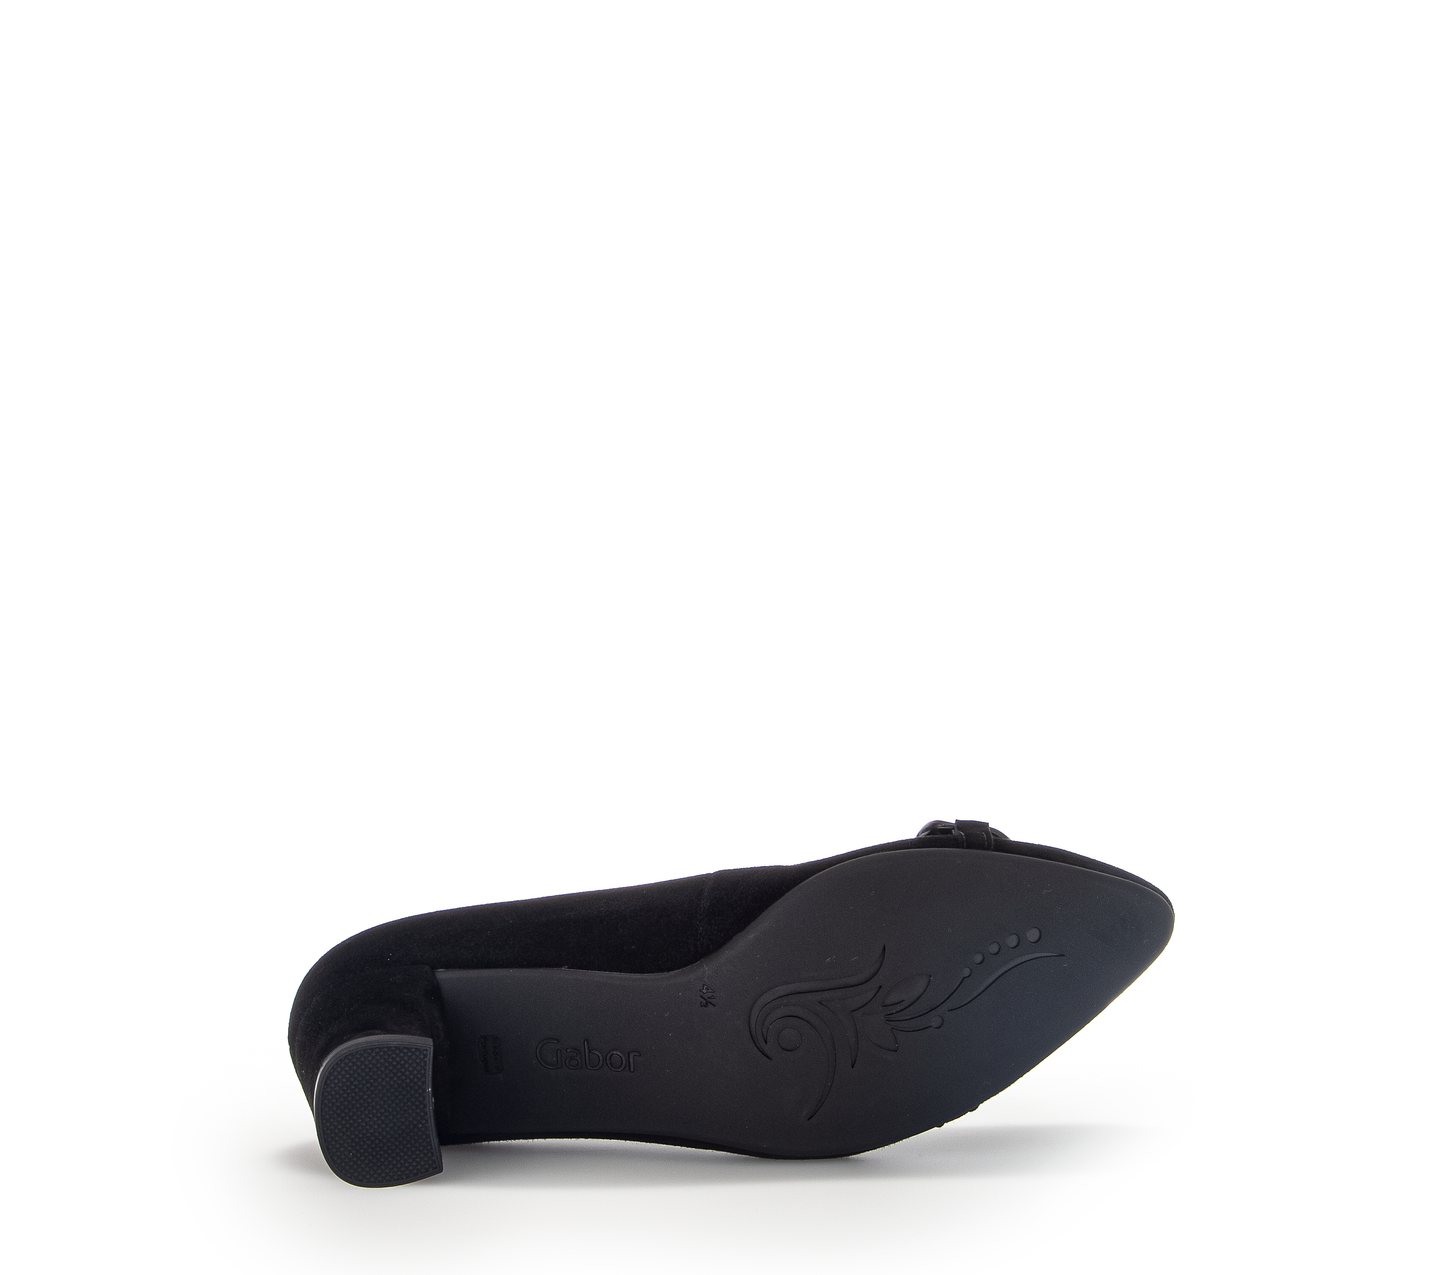 Gabor 32.153.47 Comfort G Fit Black Suede Block Heels with Chain